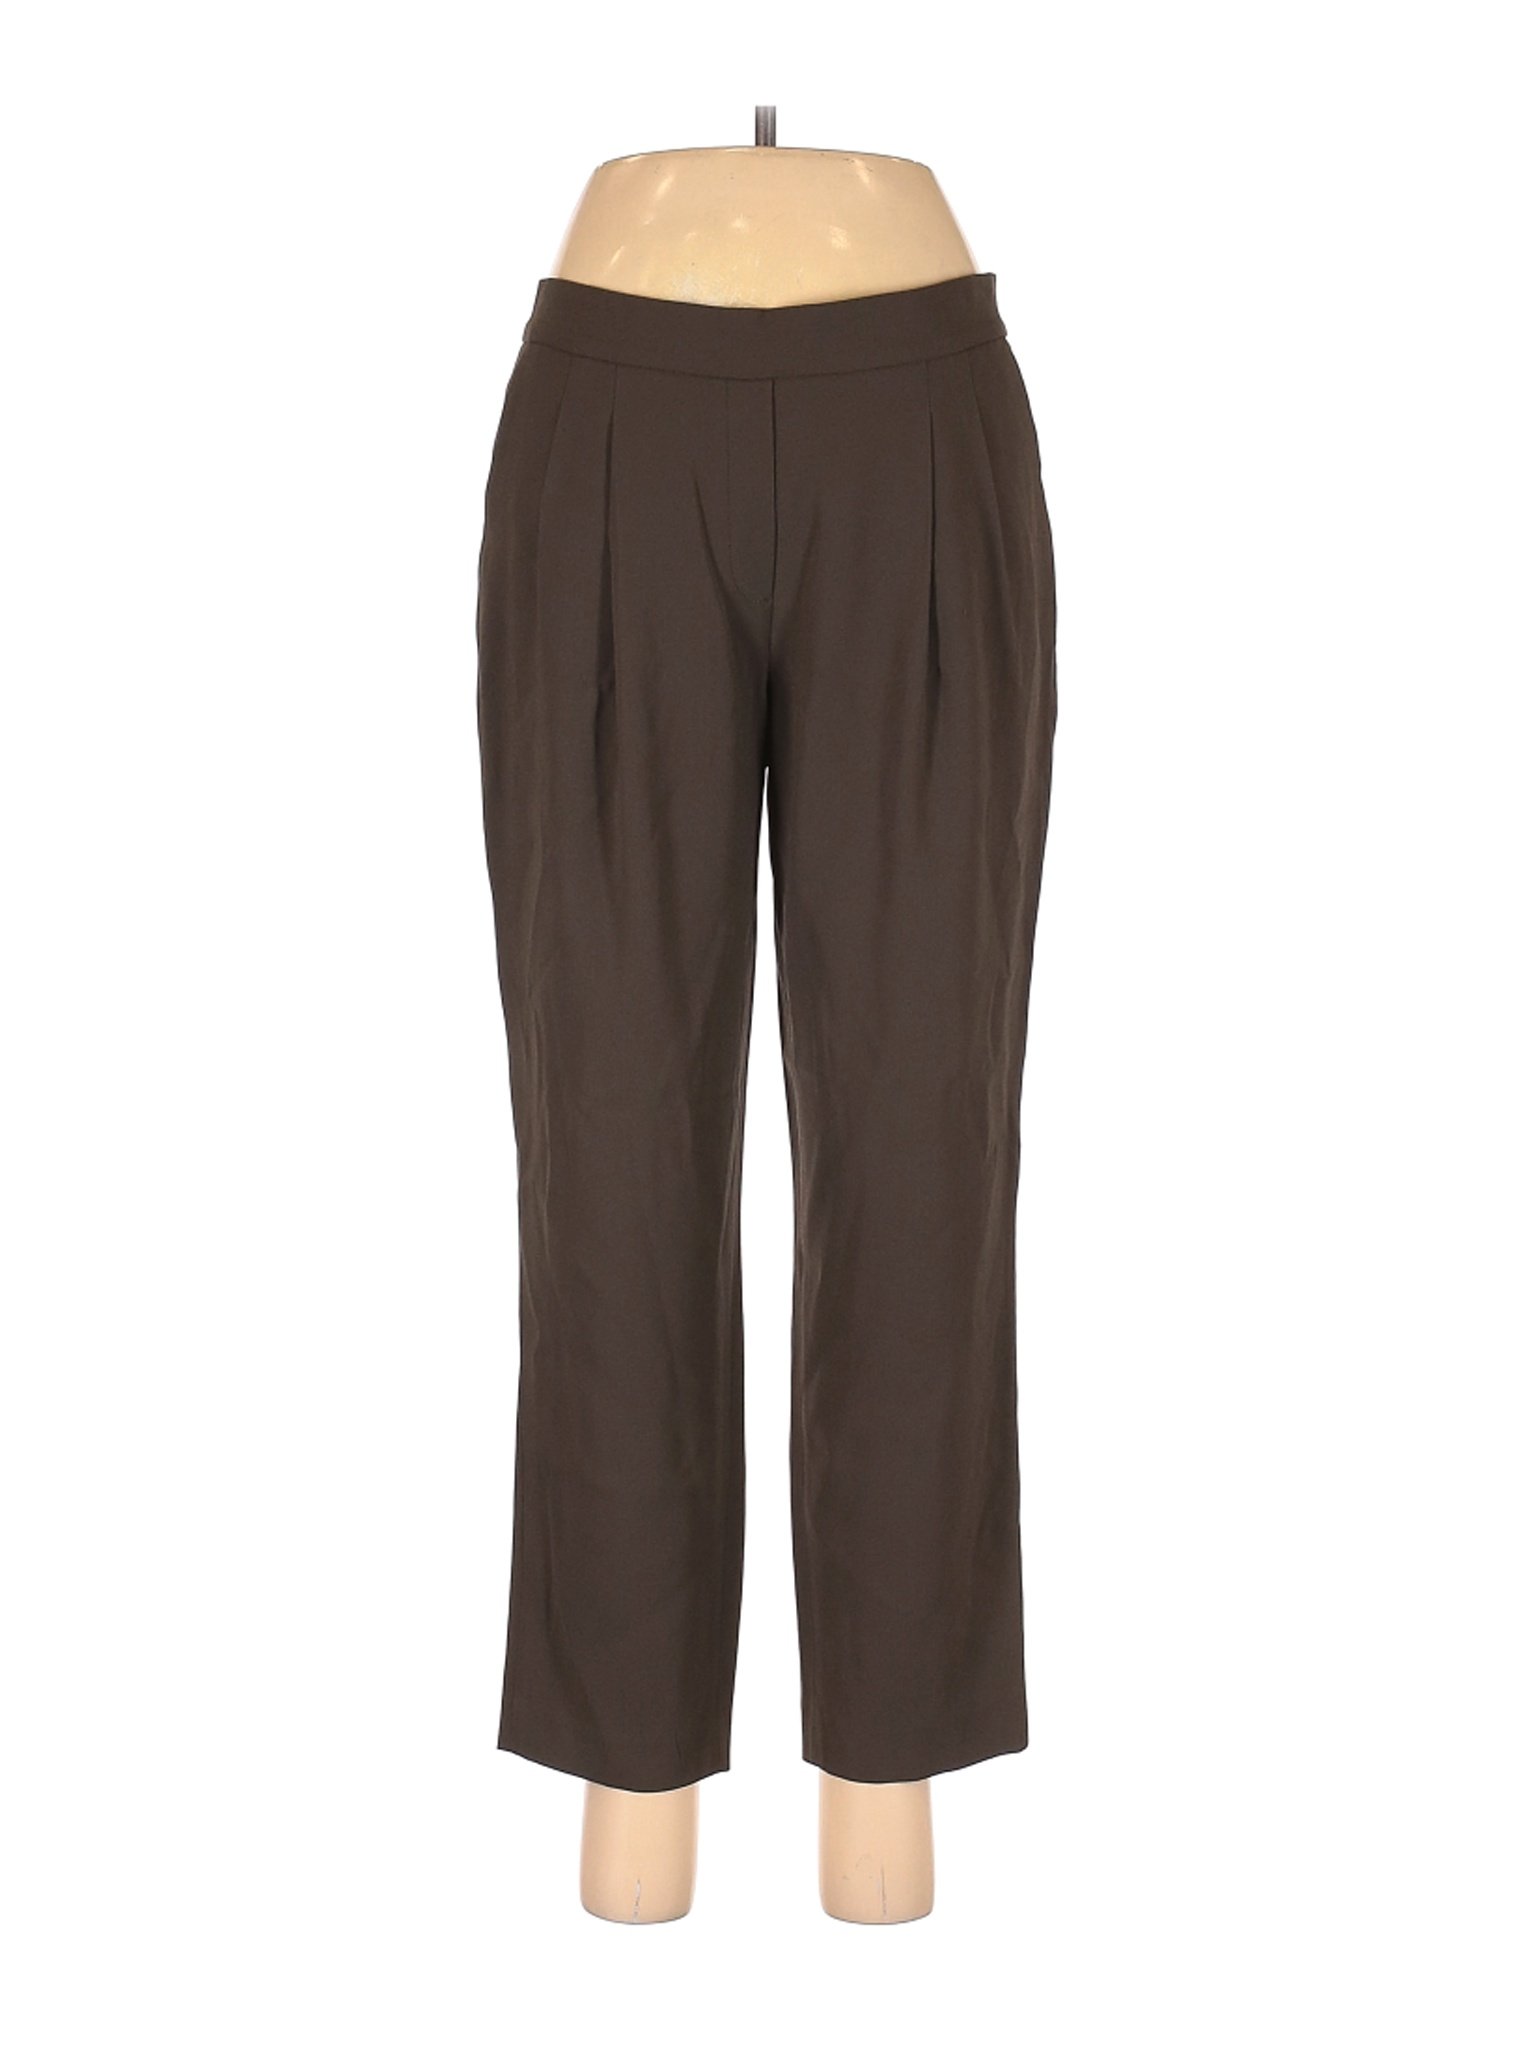 Babaton Women Brown Casual Pants 8 | eBay